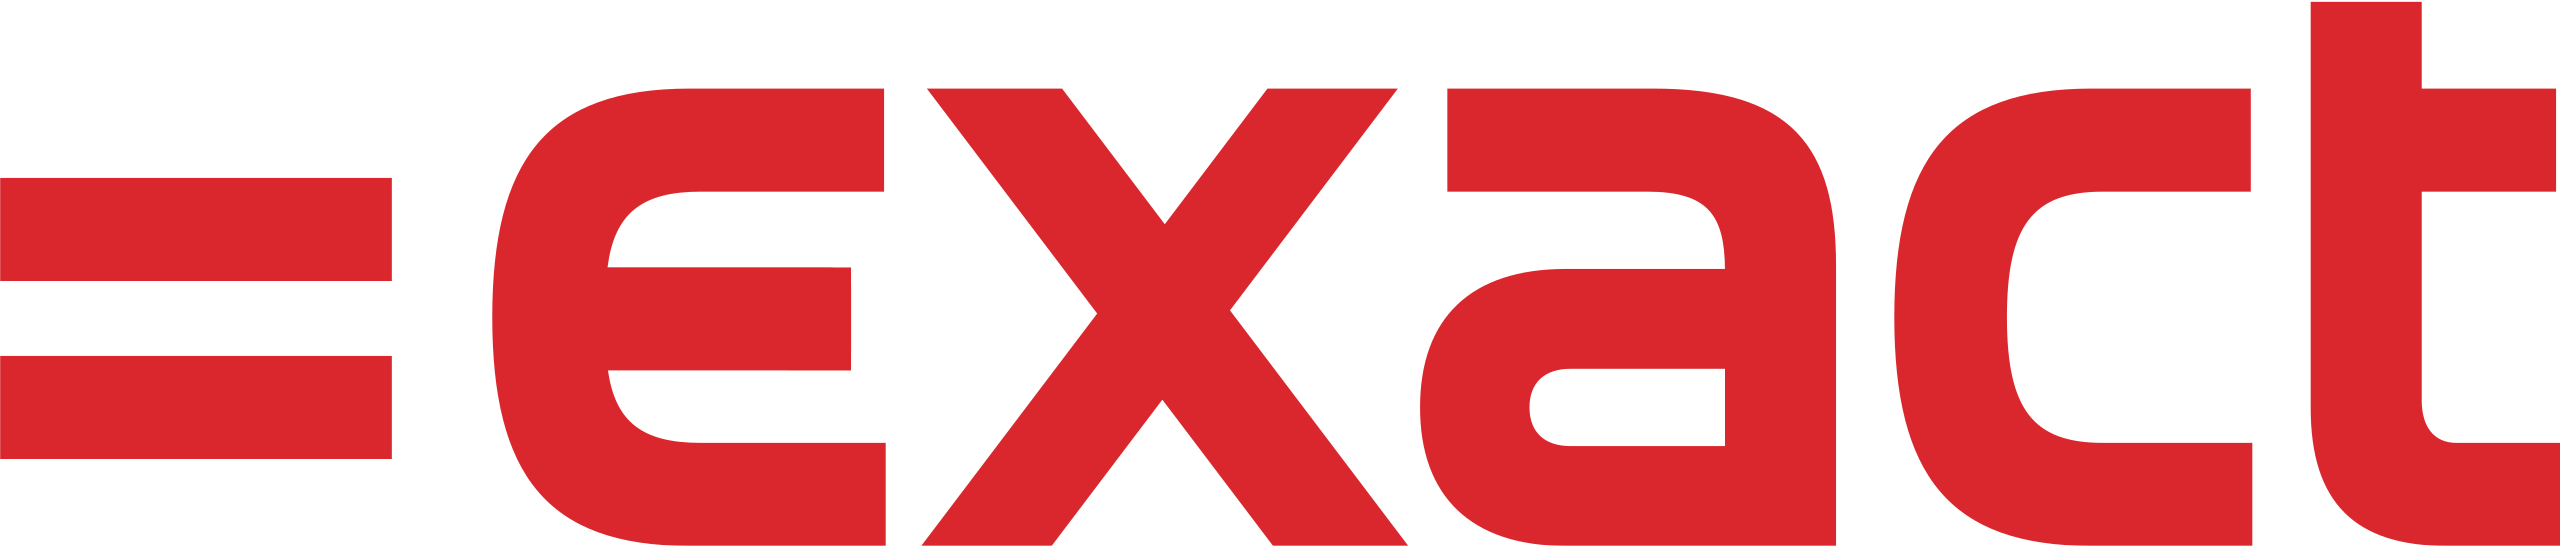 2560px Exact logo.svg